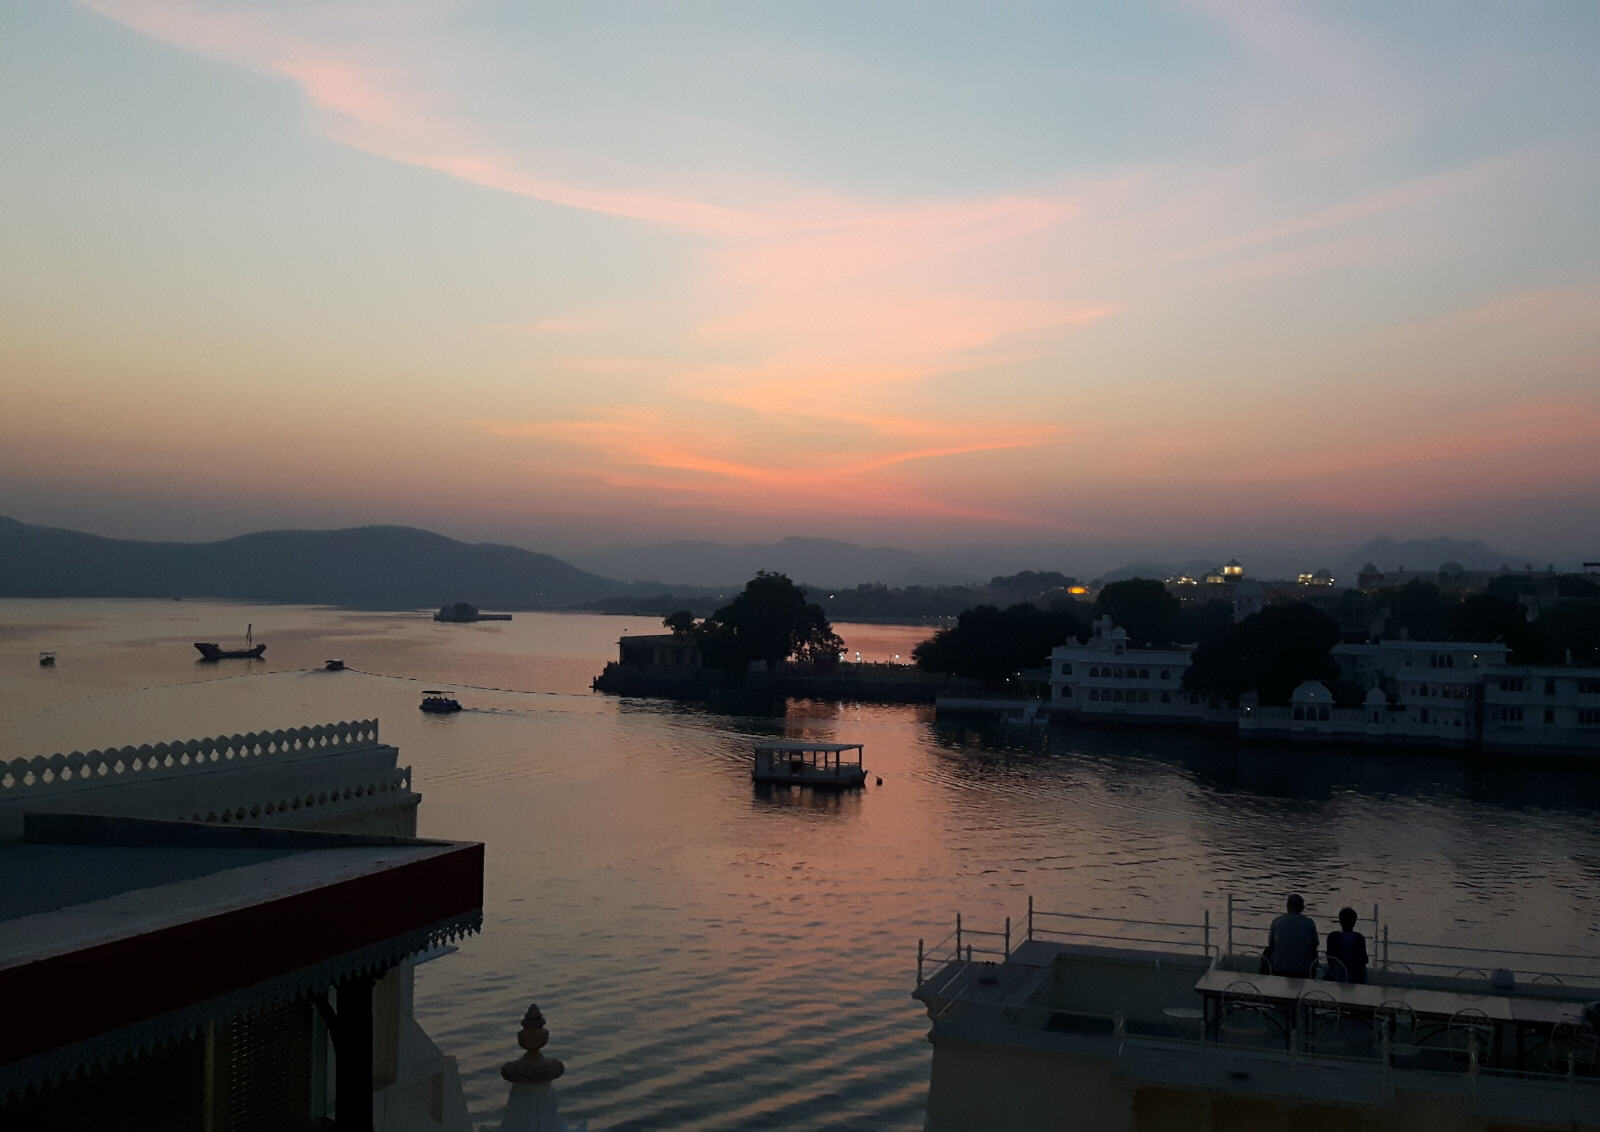 Sunset on the lake at Udaipur, Rajasthan